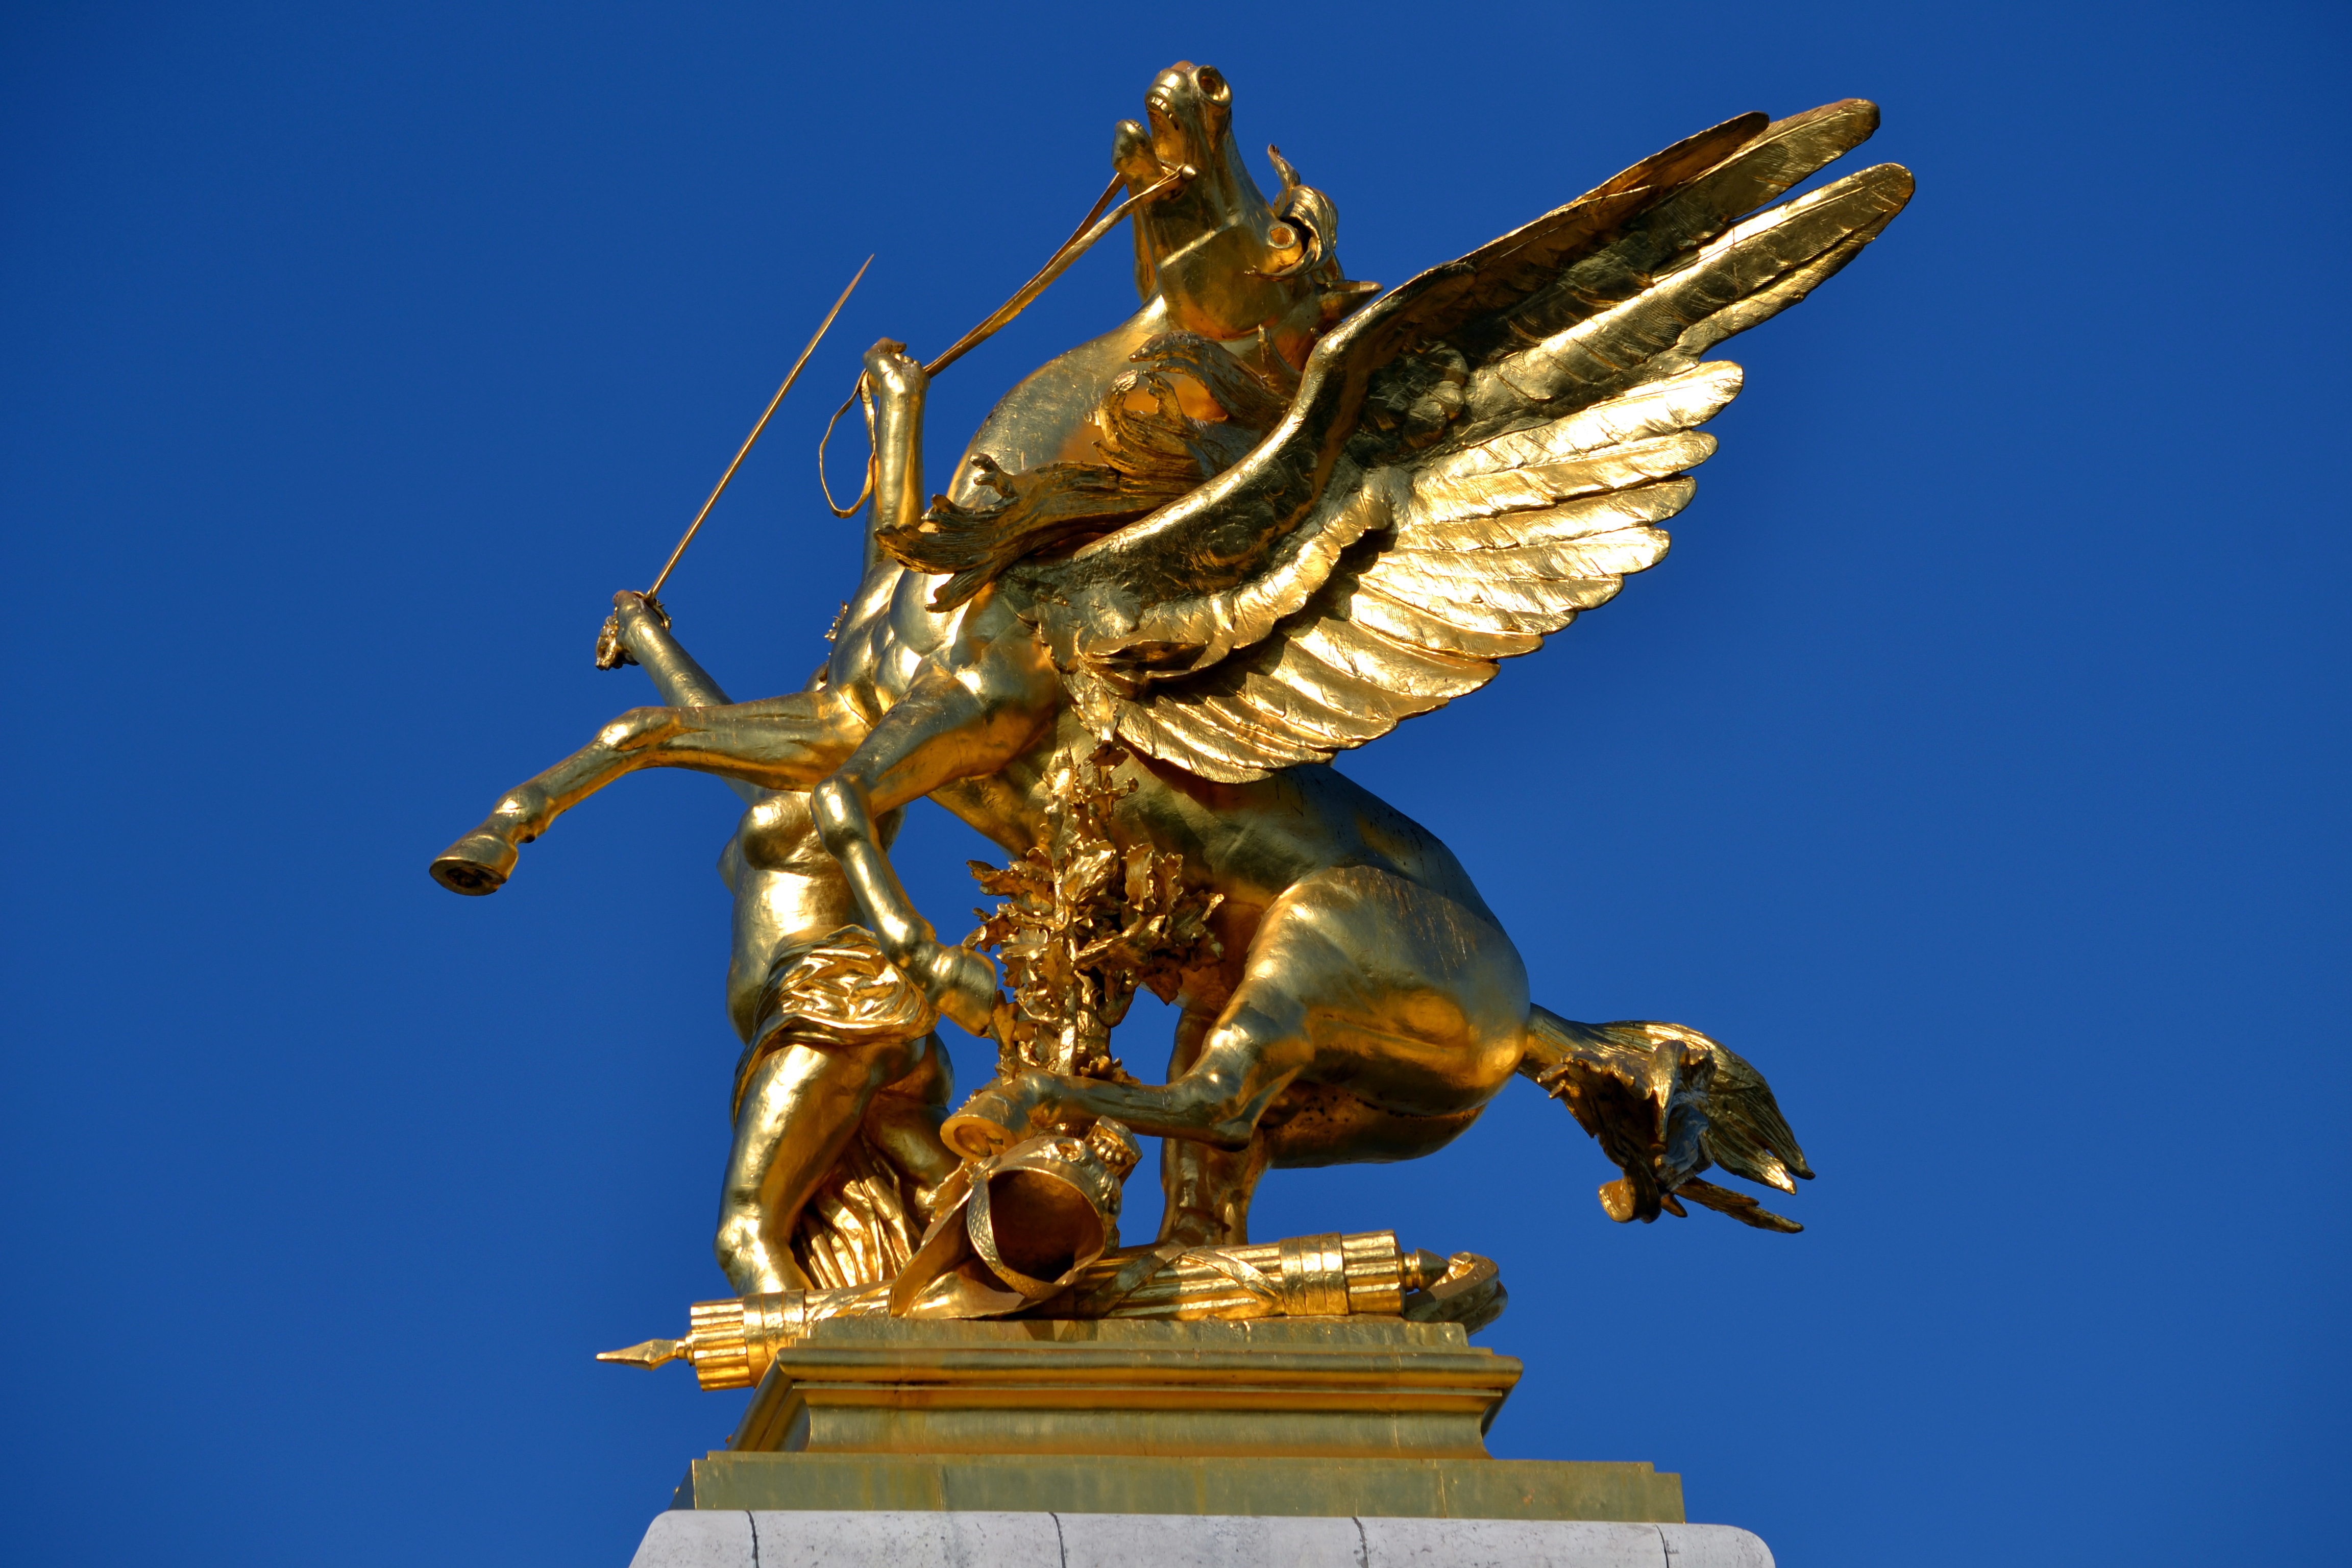 File:Golden statue on Pont Alexandre III 1.jpg - Wikimedia Commons